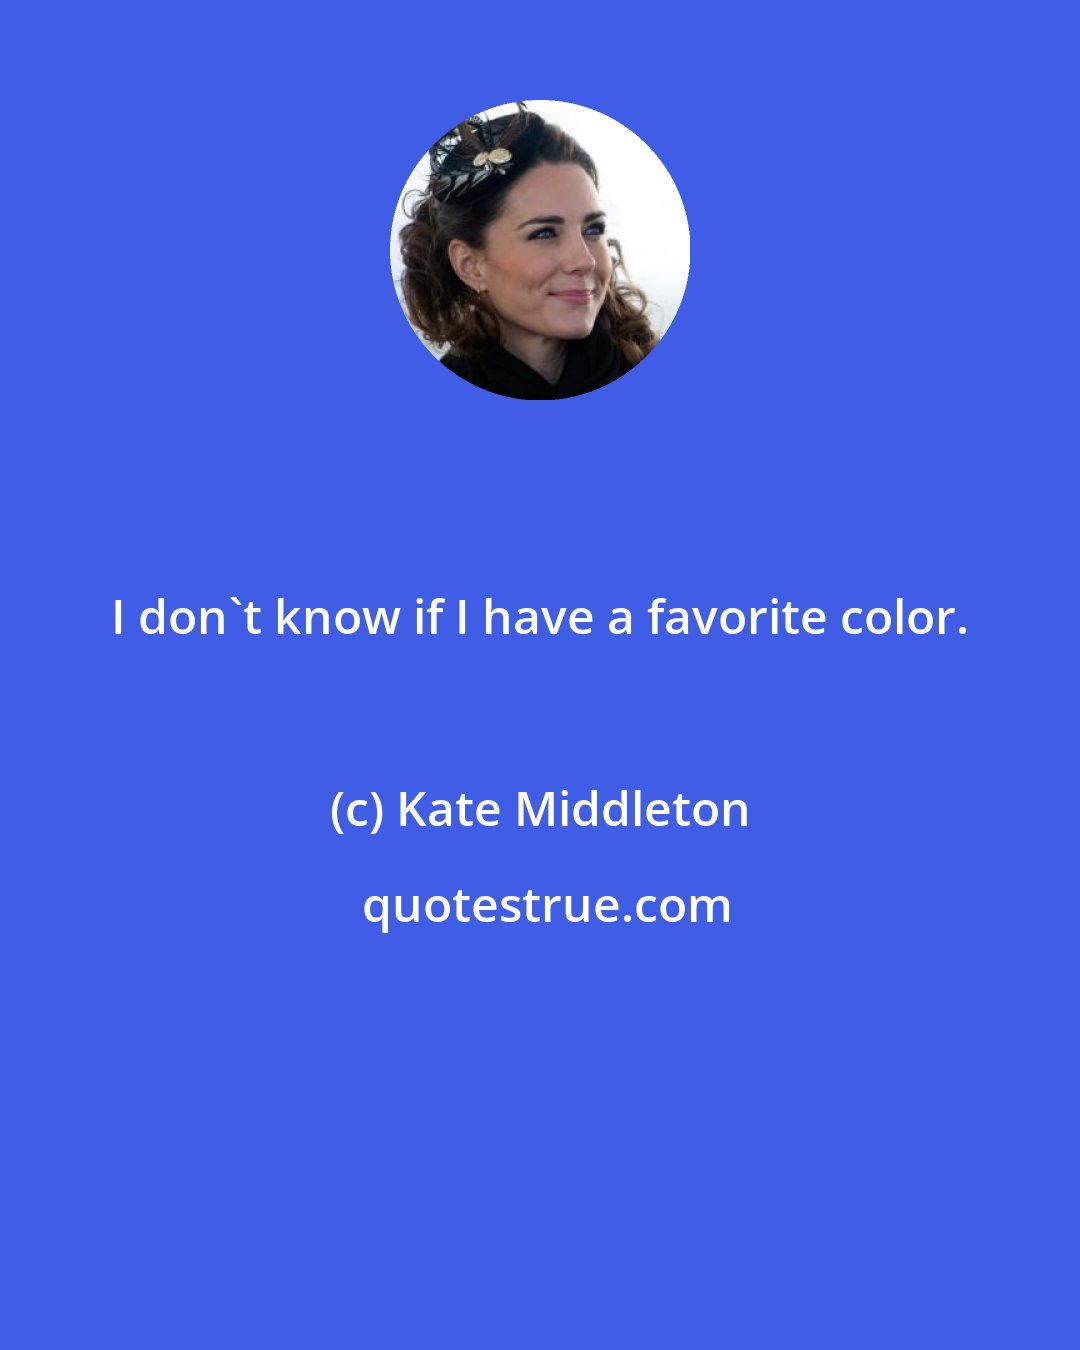 Kate Middleton: I don't know if I have a favorite color.